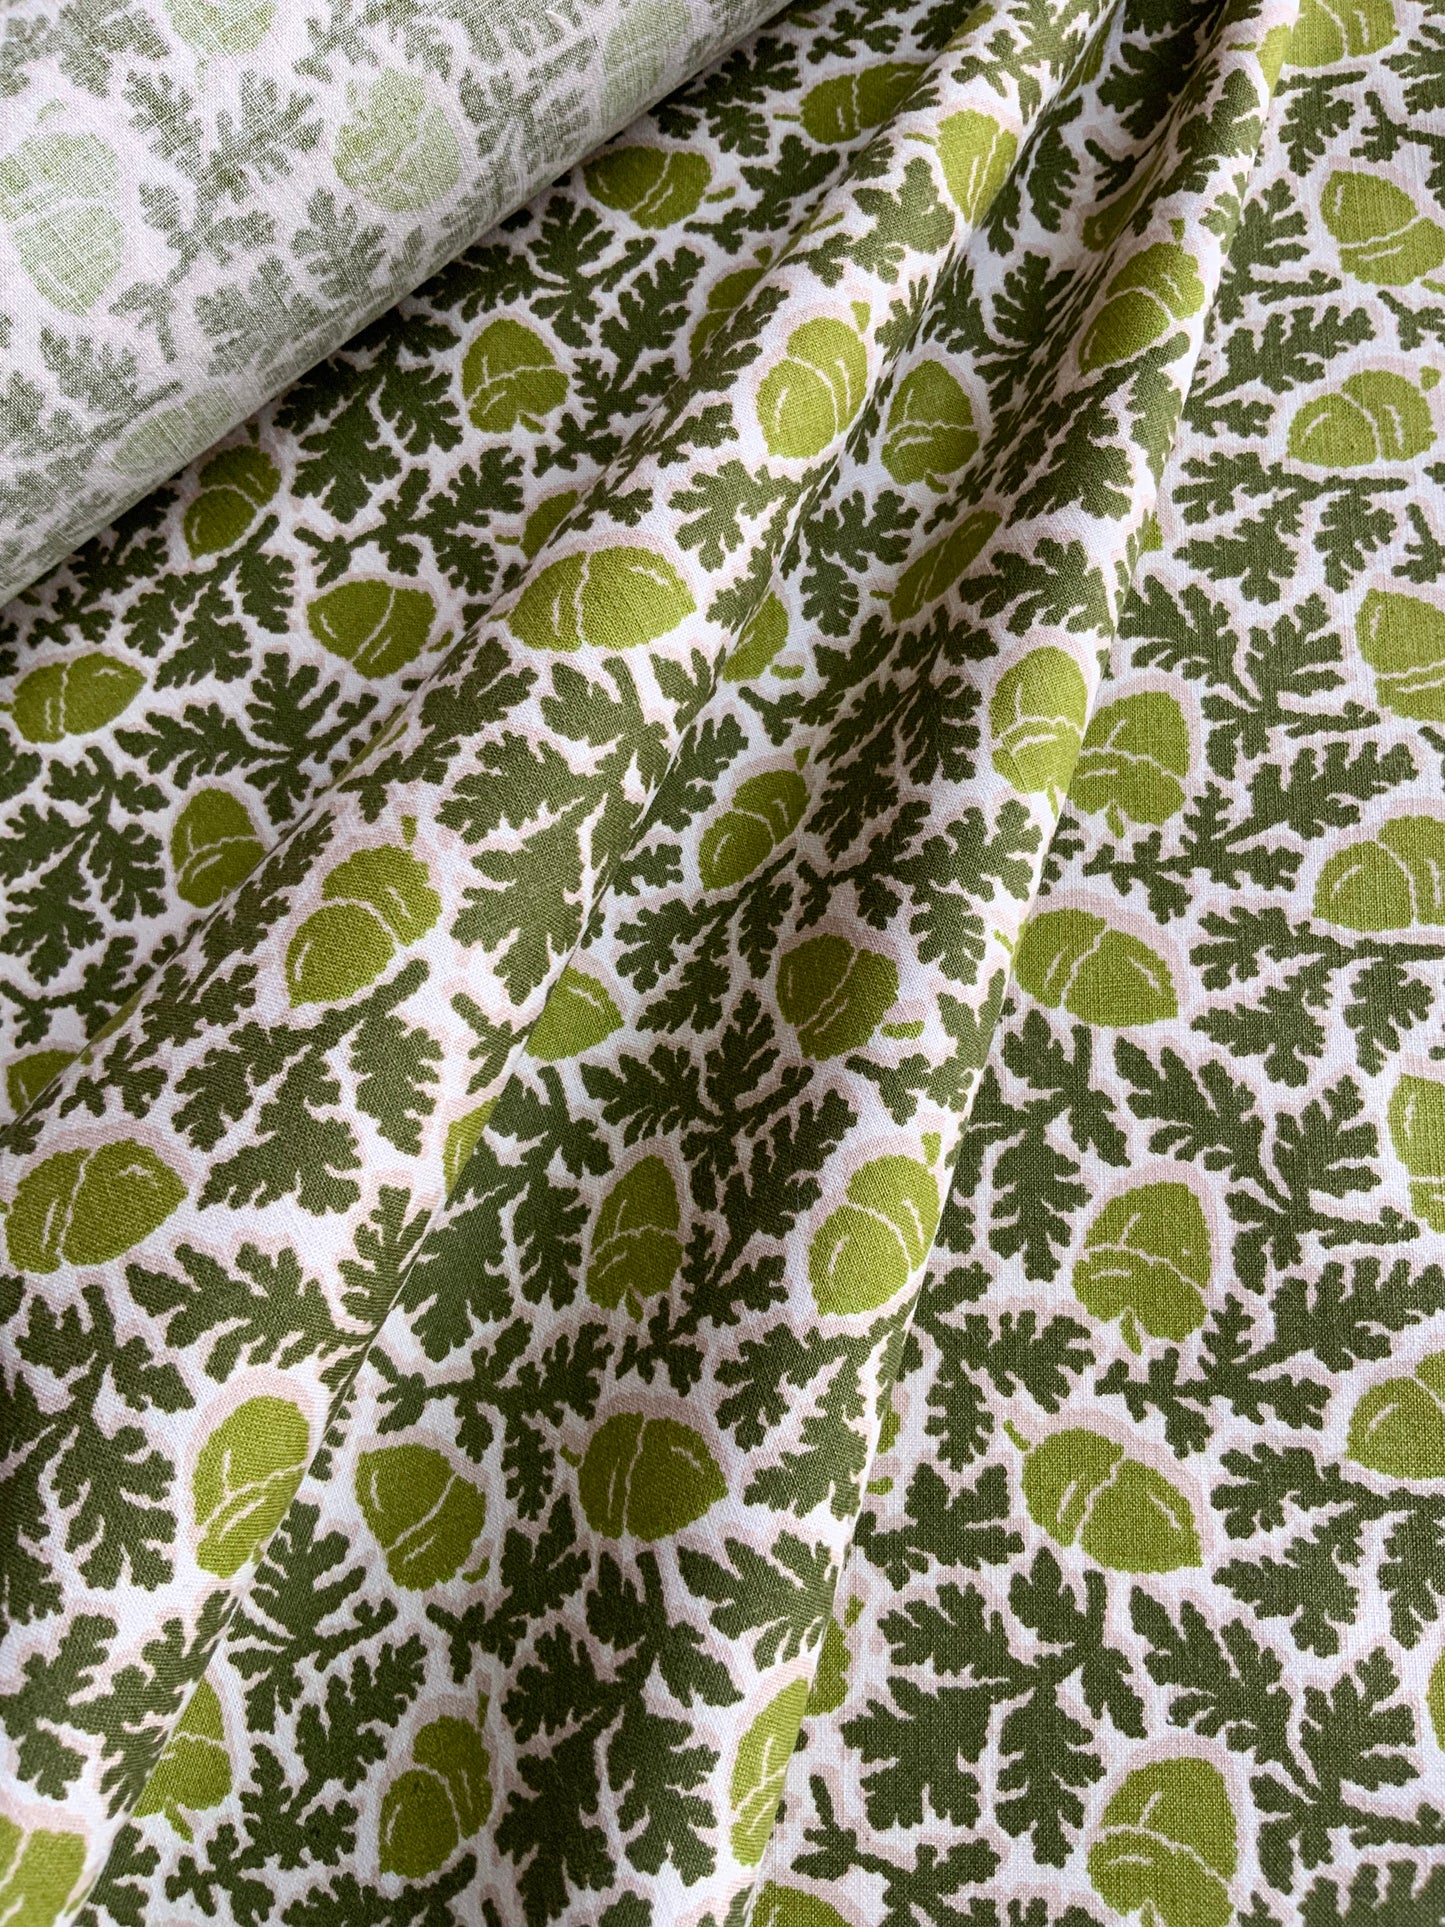 Tasha Tudor’s Original Dress Handprint in Green/Chartreuse